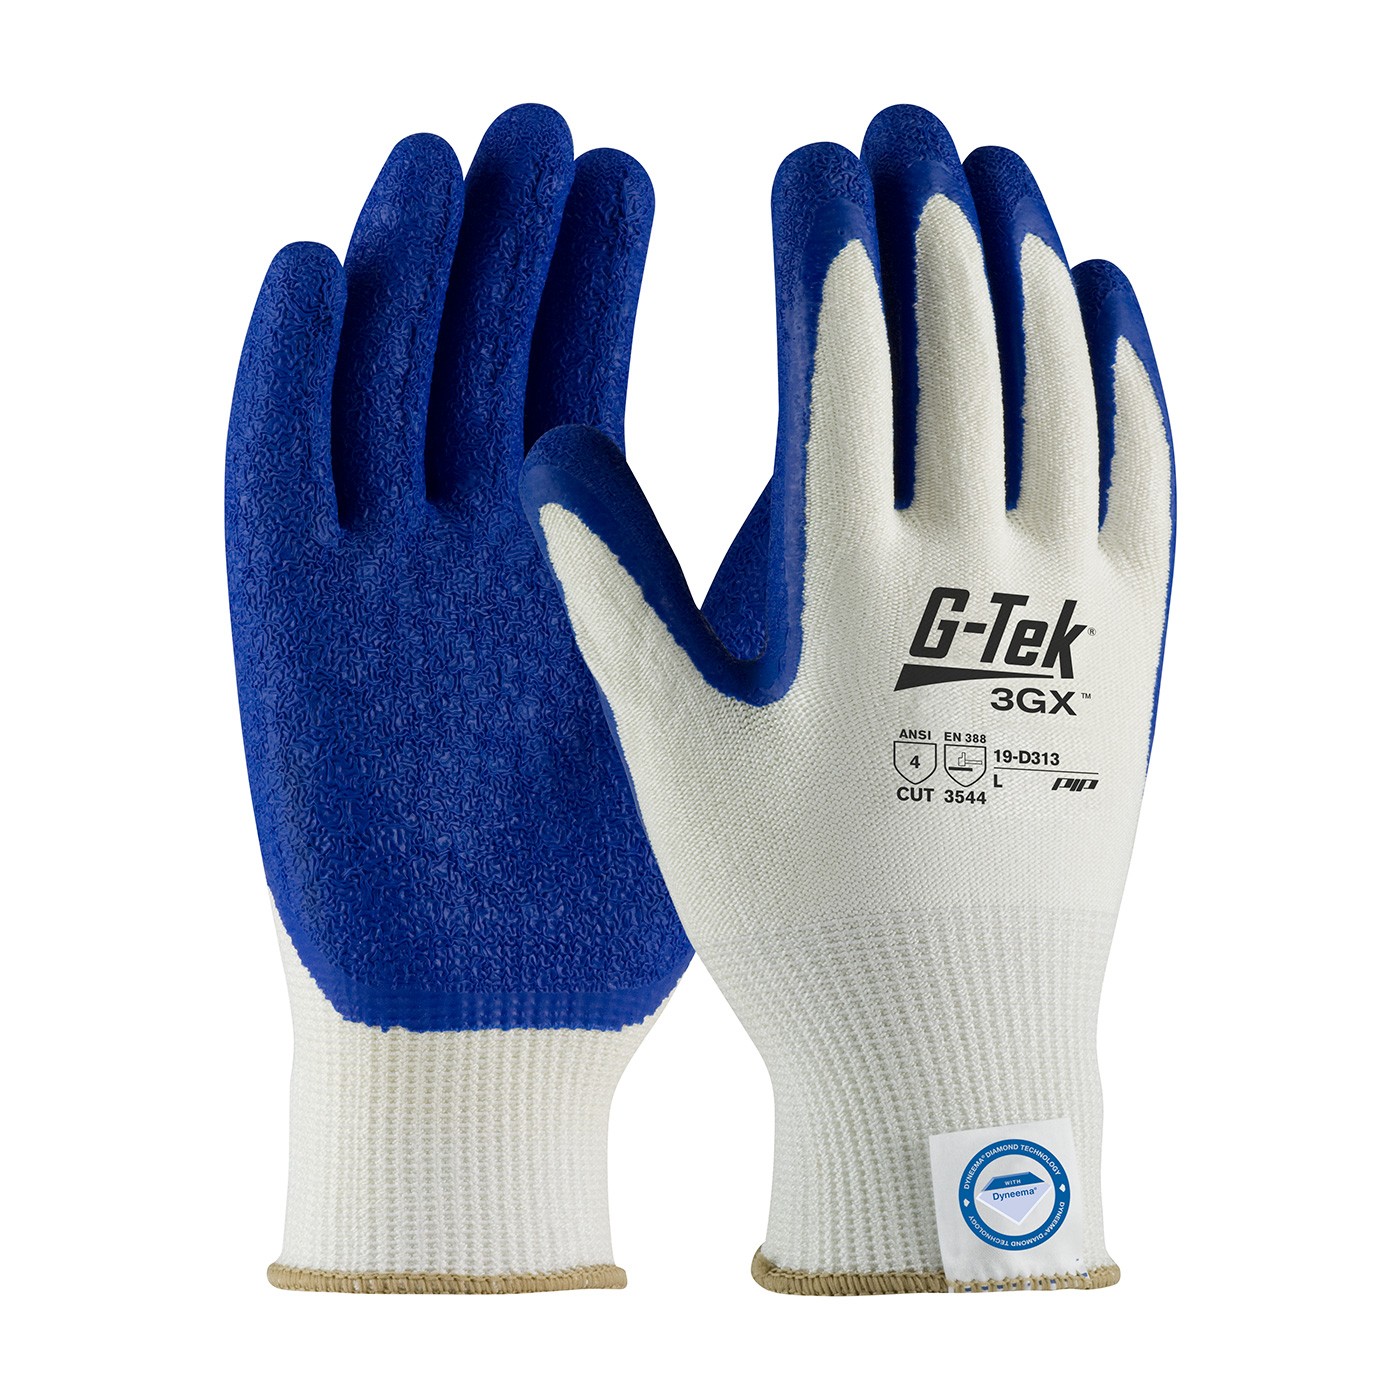 G-Tek® 3GX® Seamless Knit Dyneema® Diamond Blended Glove with Latex Coated Crinkle Grip on Palm & Fingers - Medium Weight  (#19-D313)